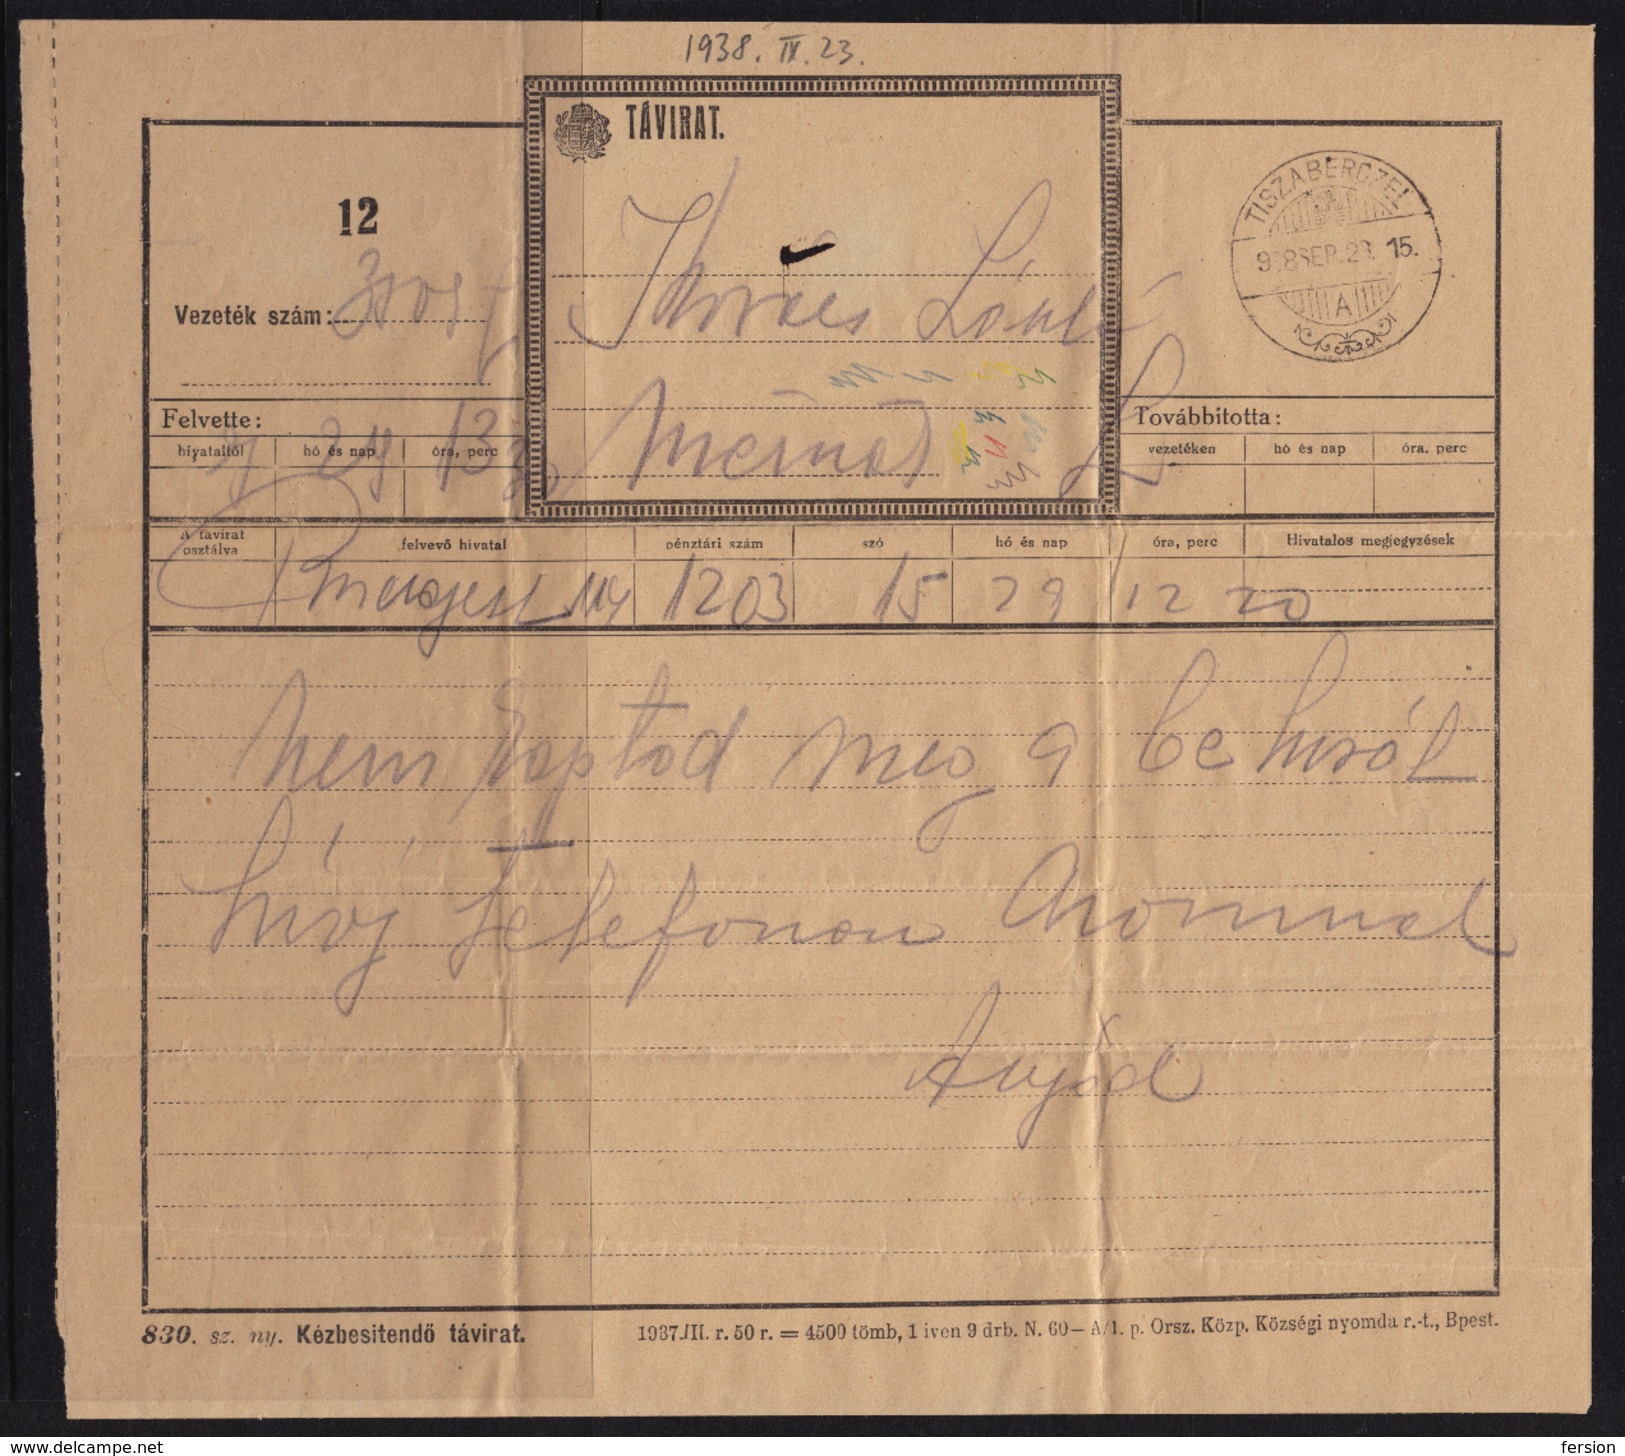 TELEGRAPH TELEGRAM 1938 Hungary - Tiszaberczel - Telegraph